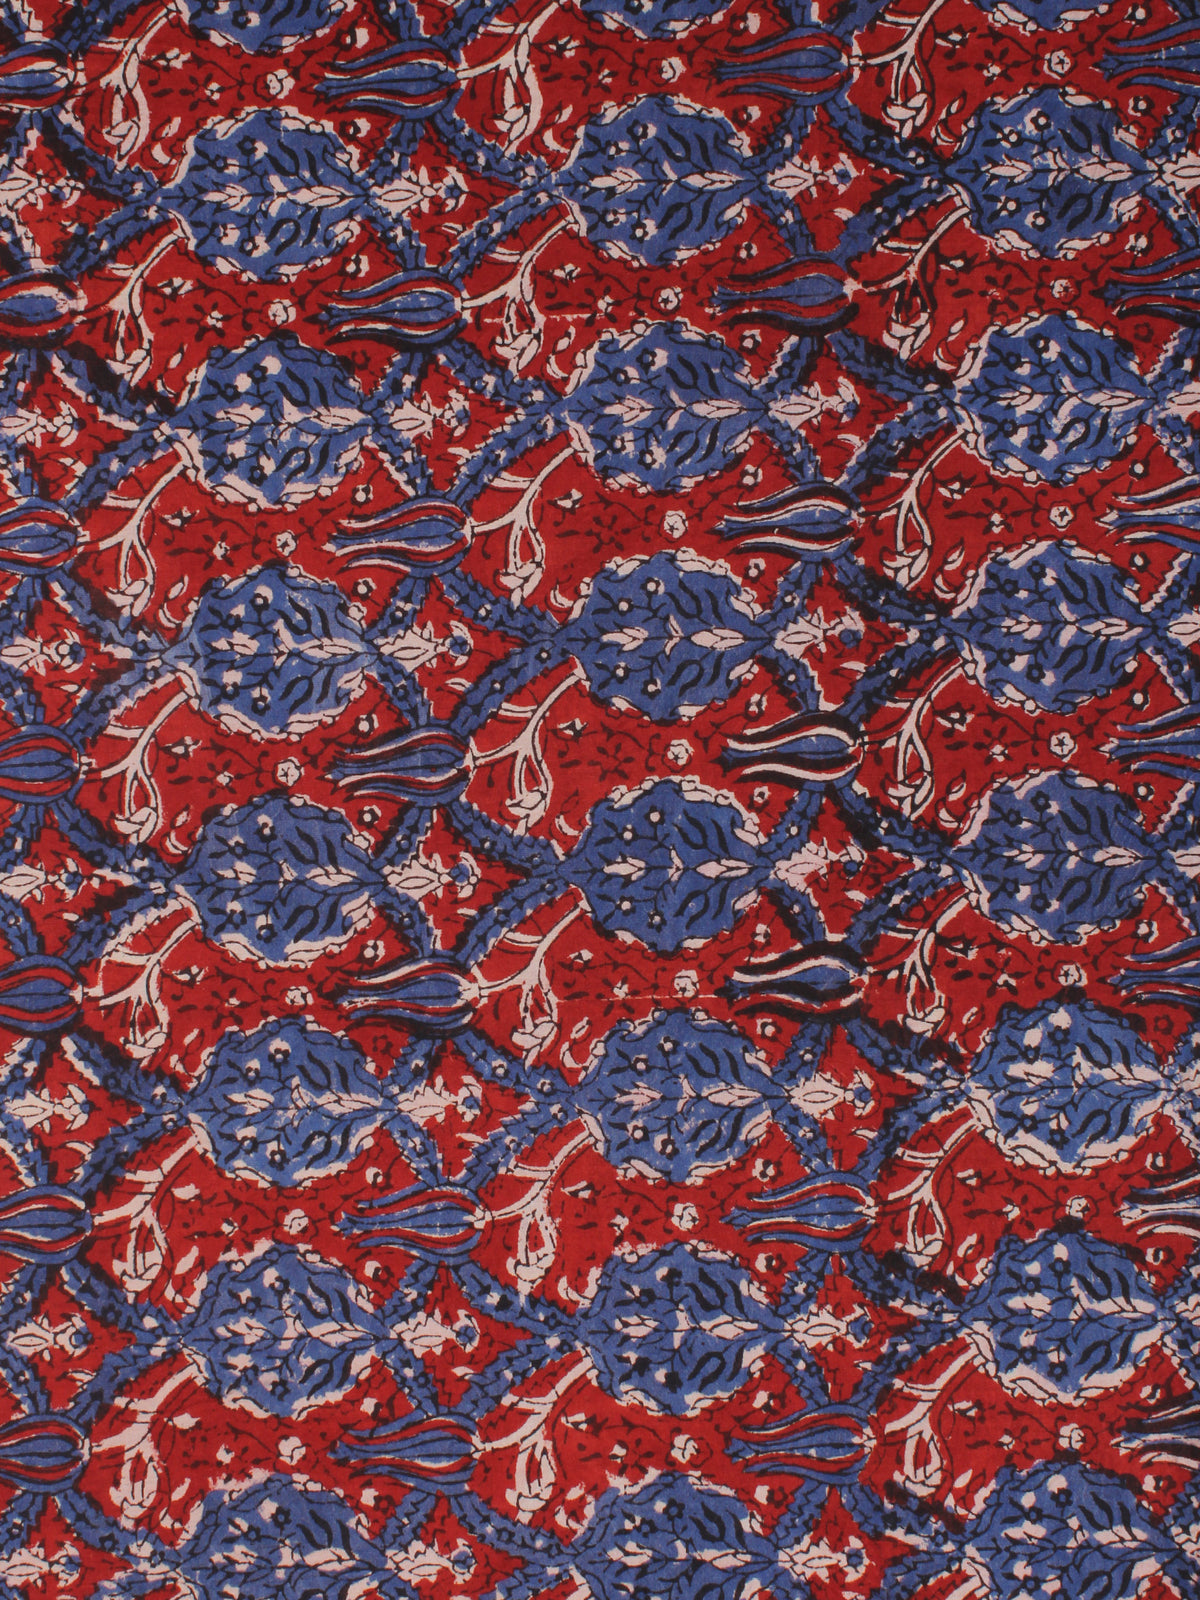 Red Indigo Hand Block Printed Cotton Fabric Per Meter - F001F2158